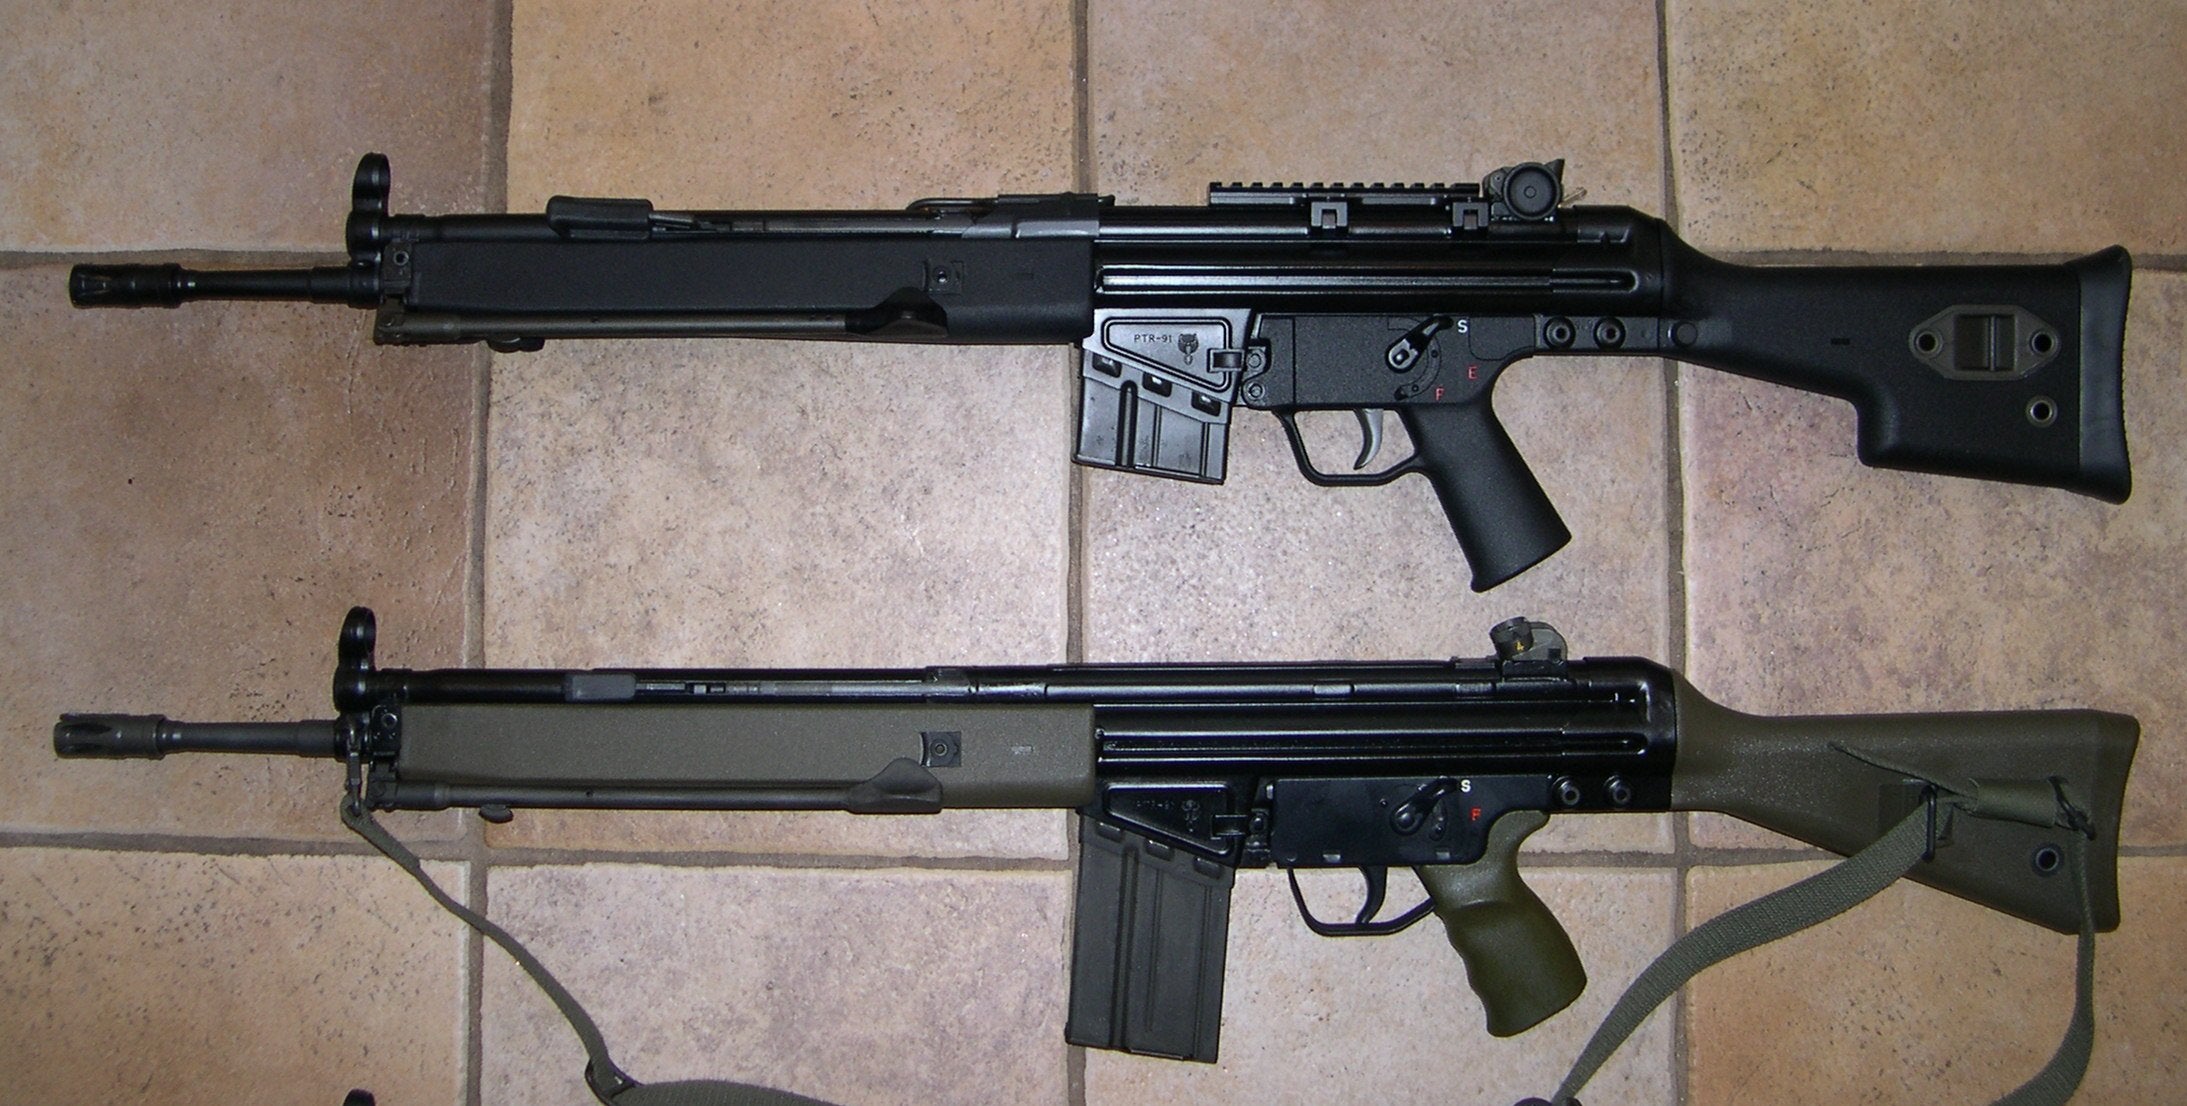 PTR 91 GIR ) - HK G3/91 clone. 